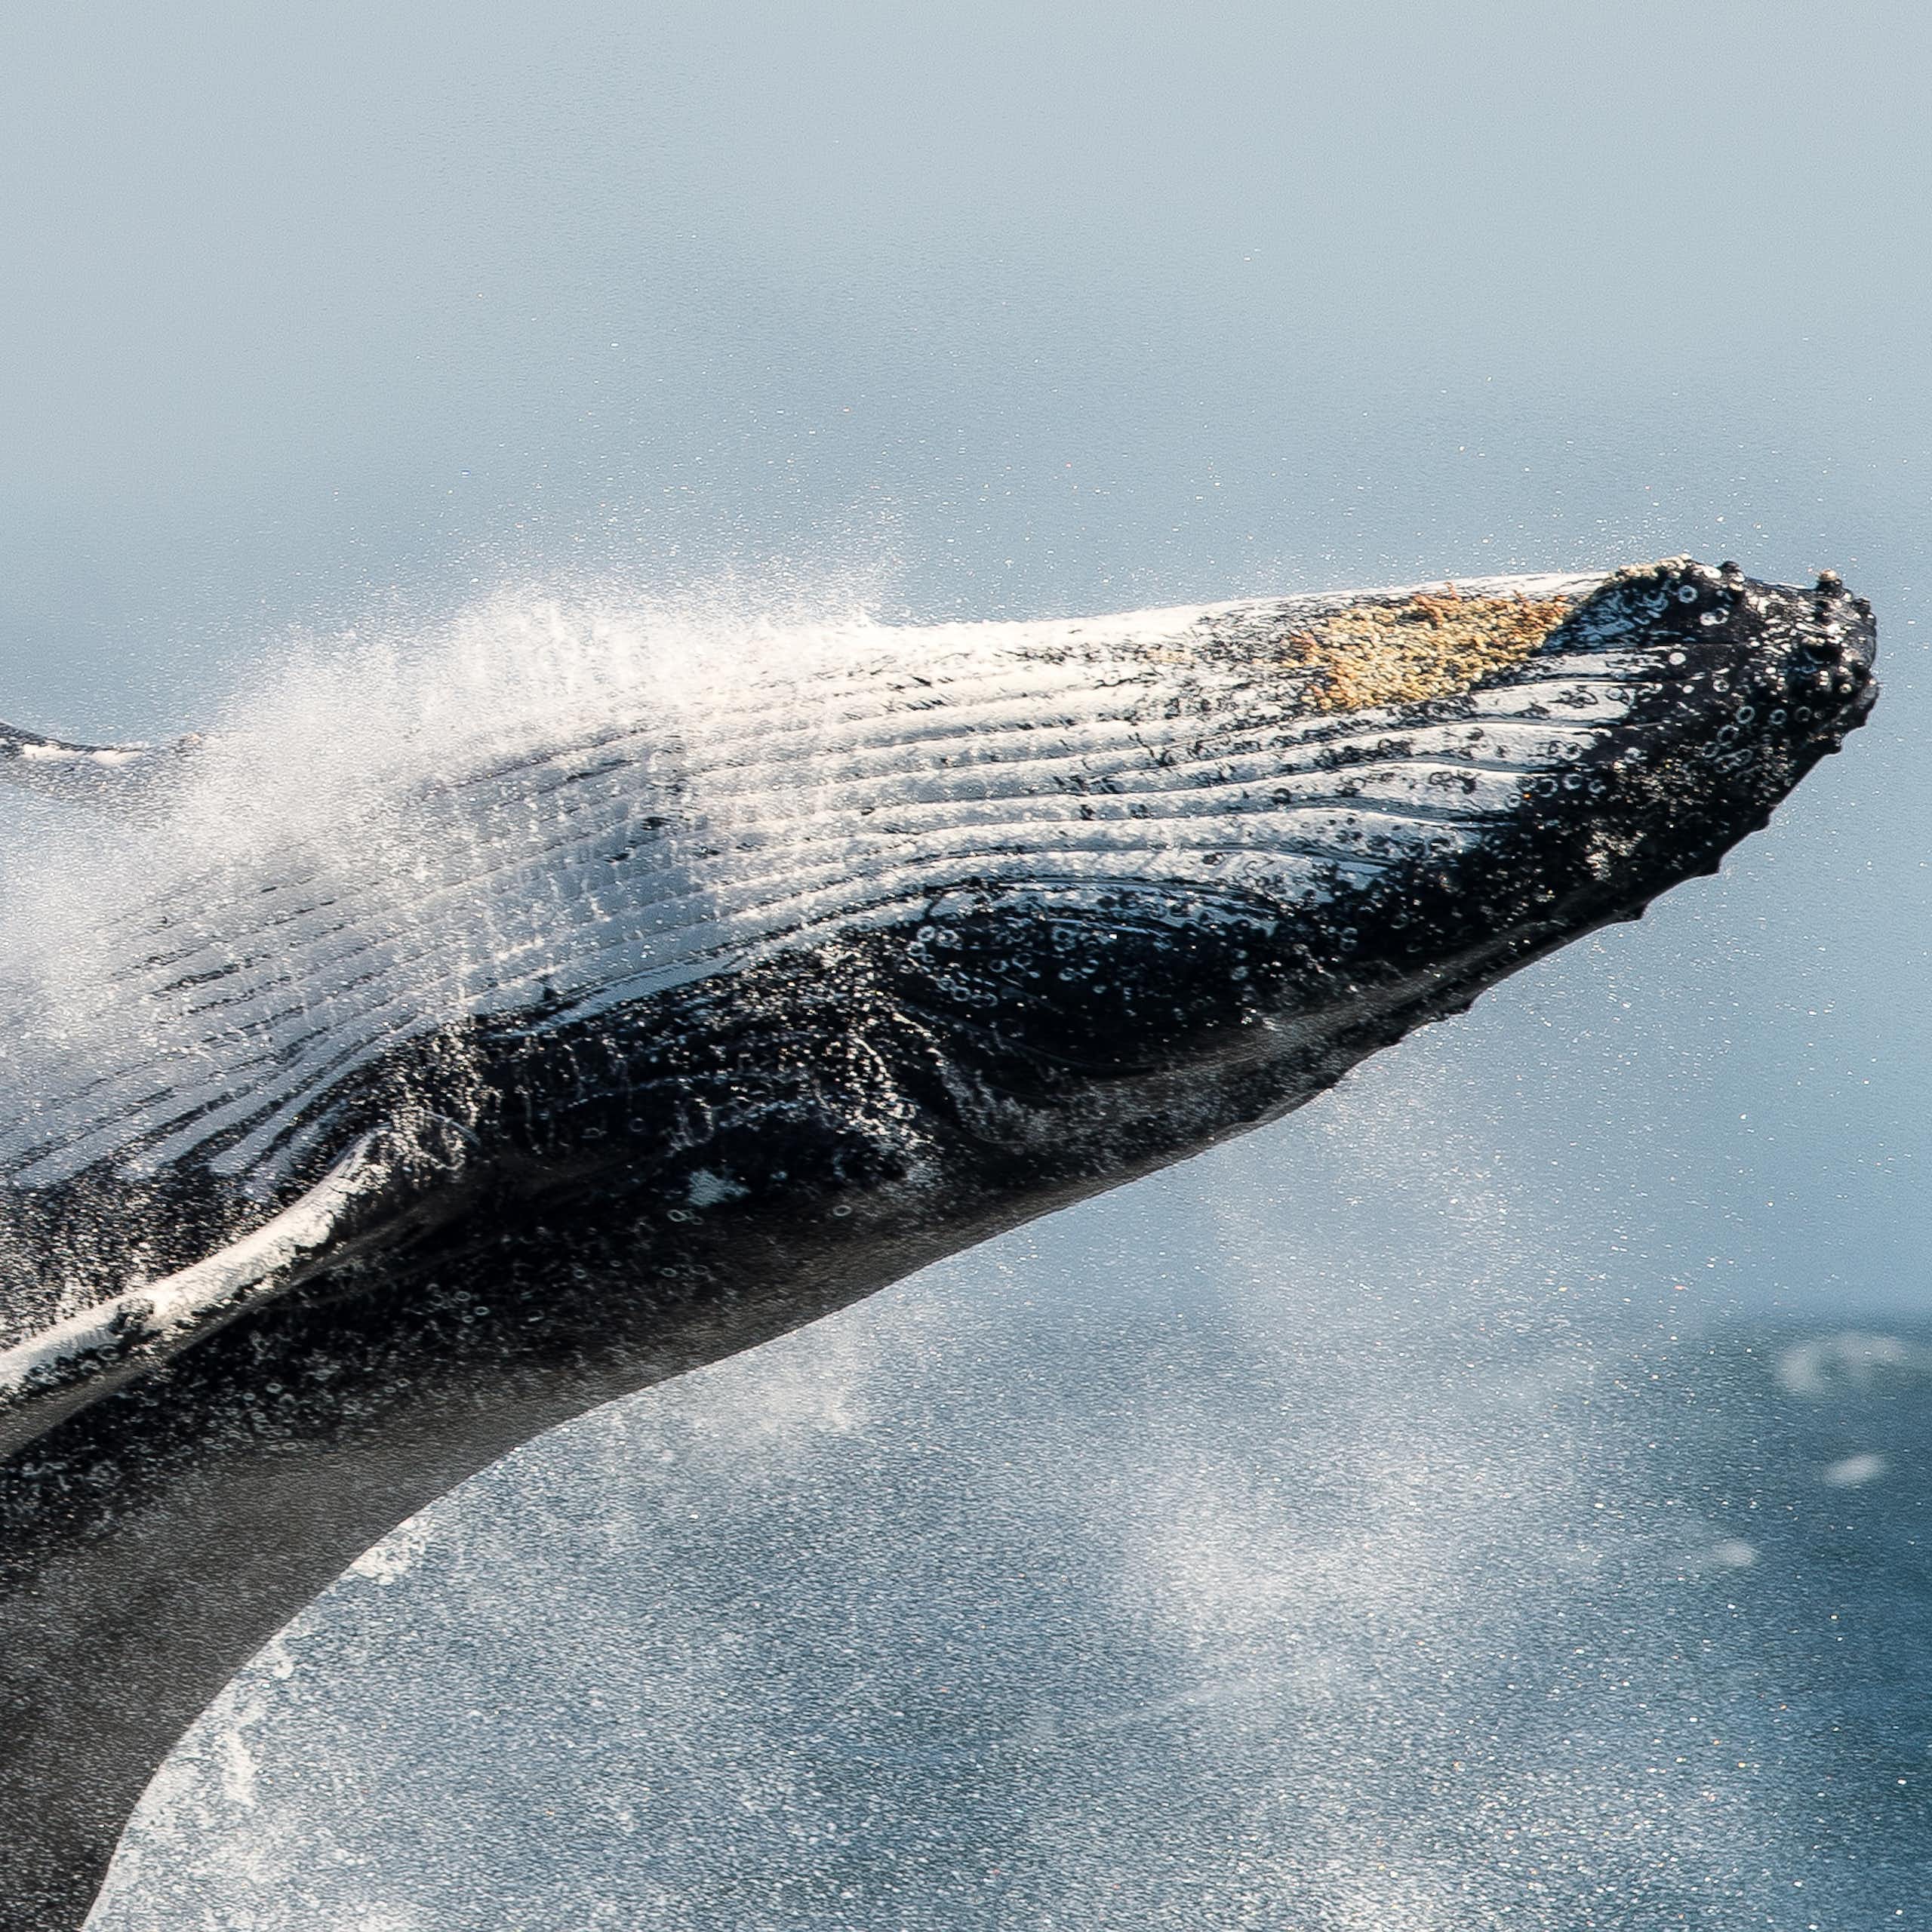 A humpback whale breaching. 